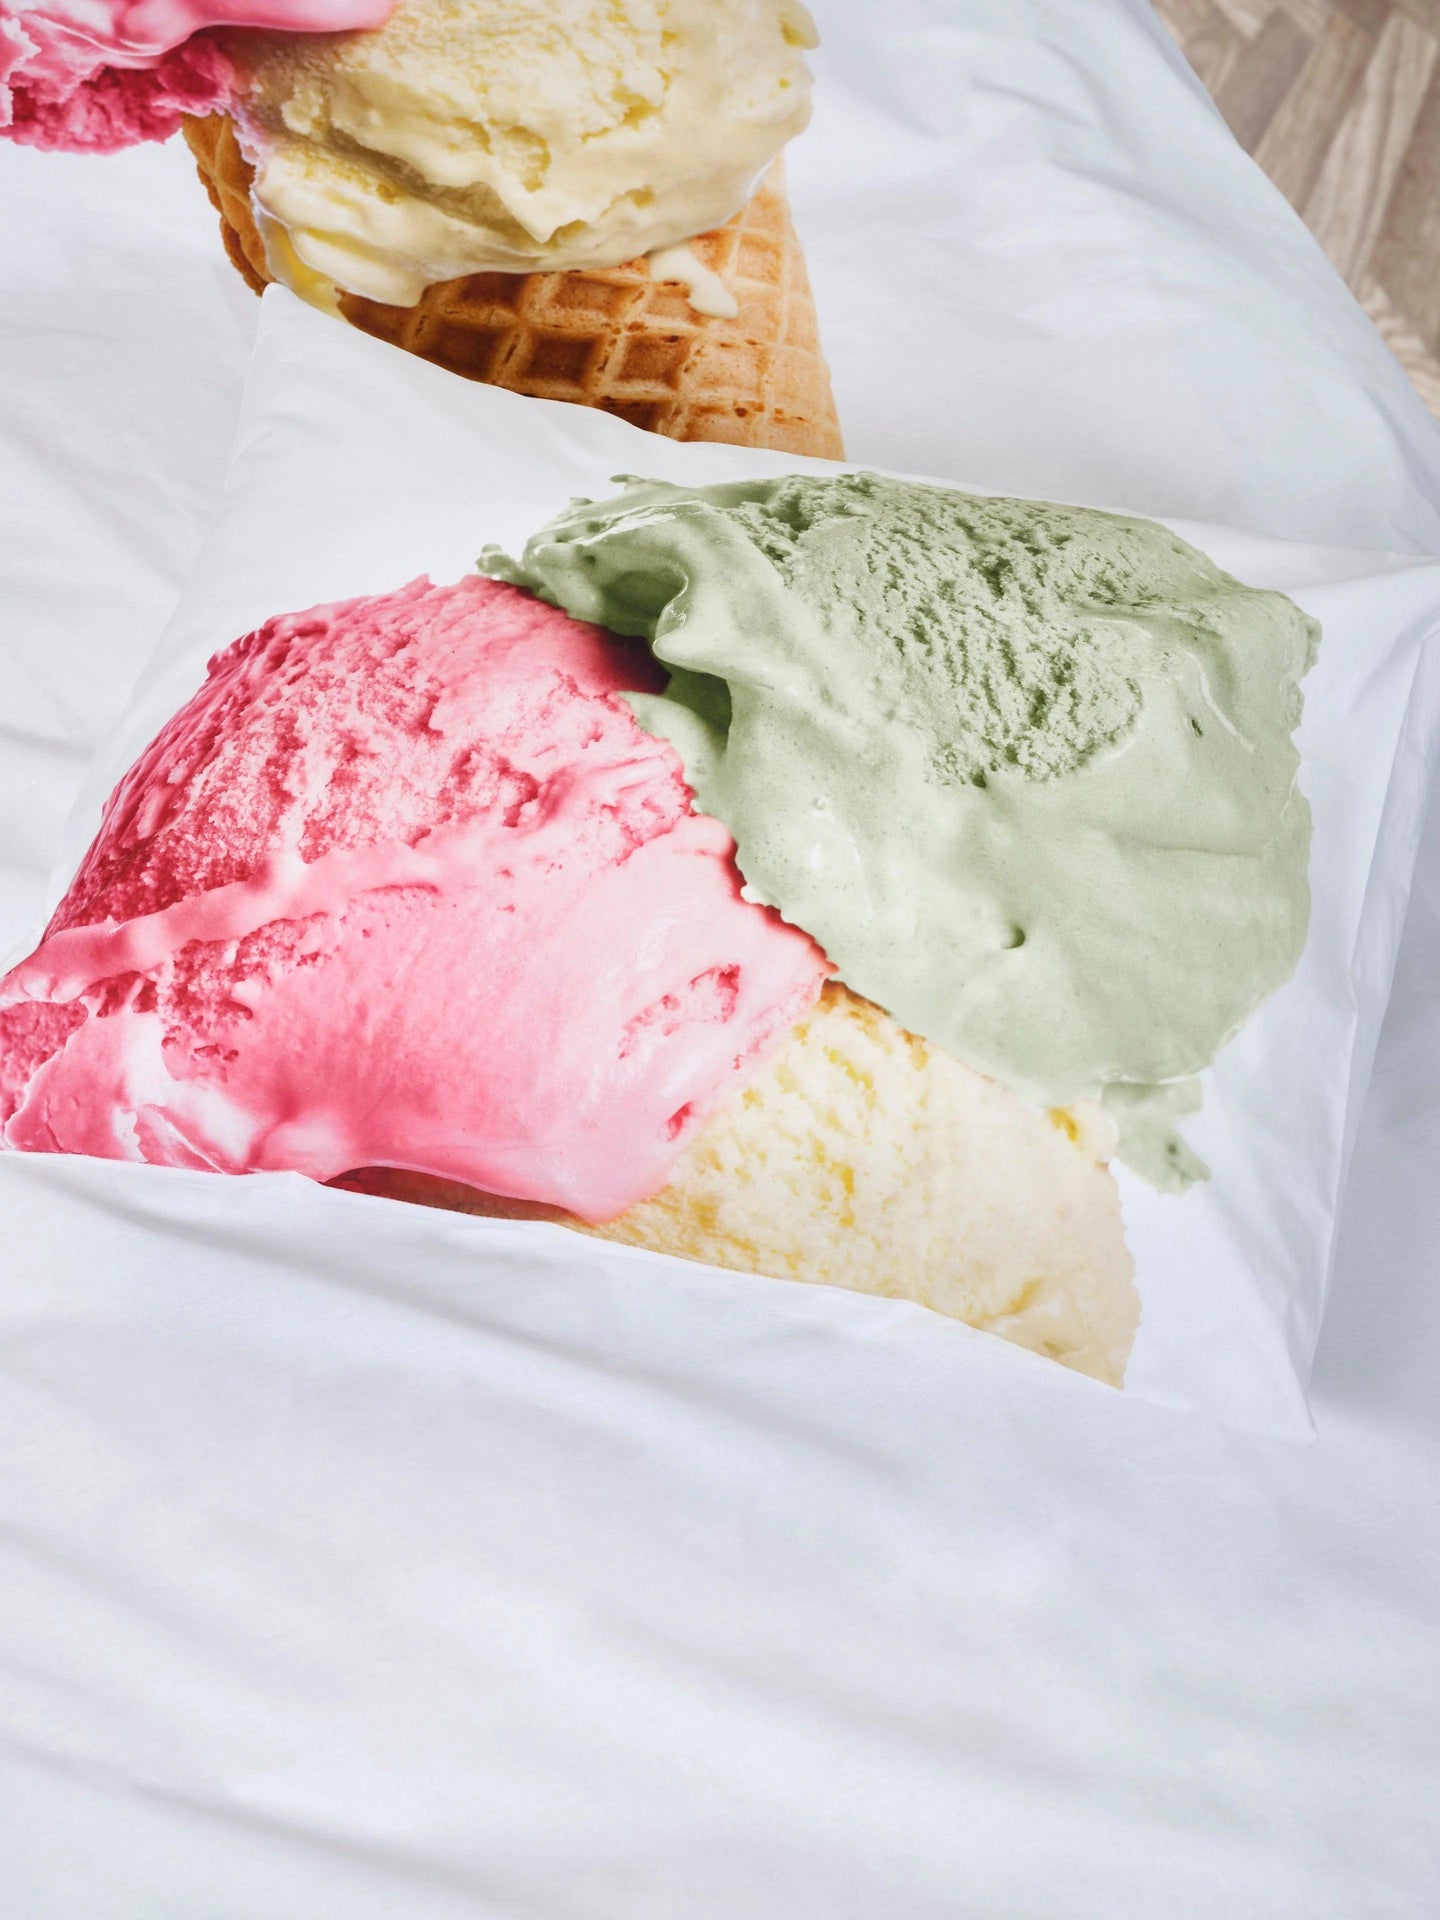 Ice Cream kussensloop - SNURK